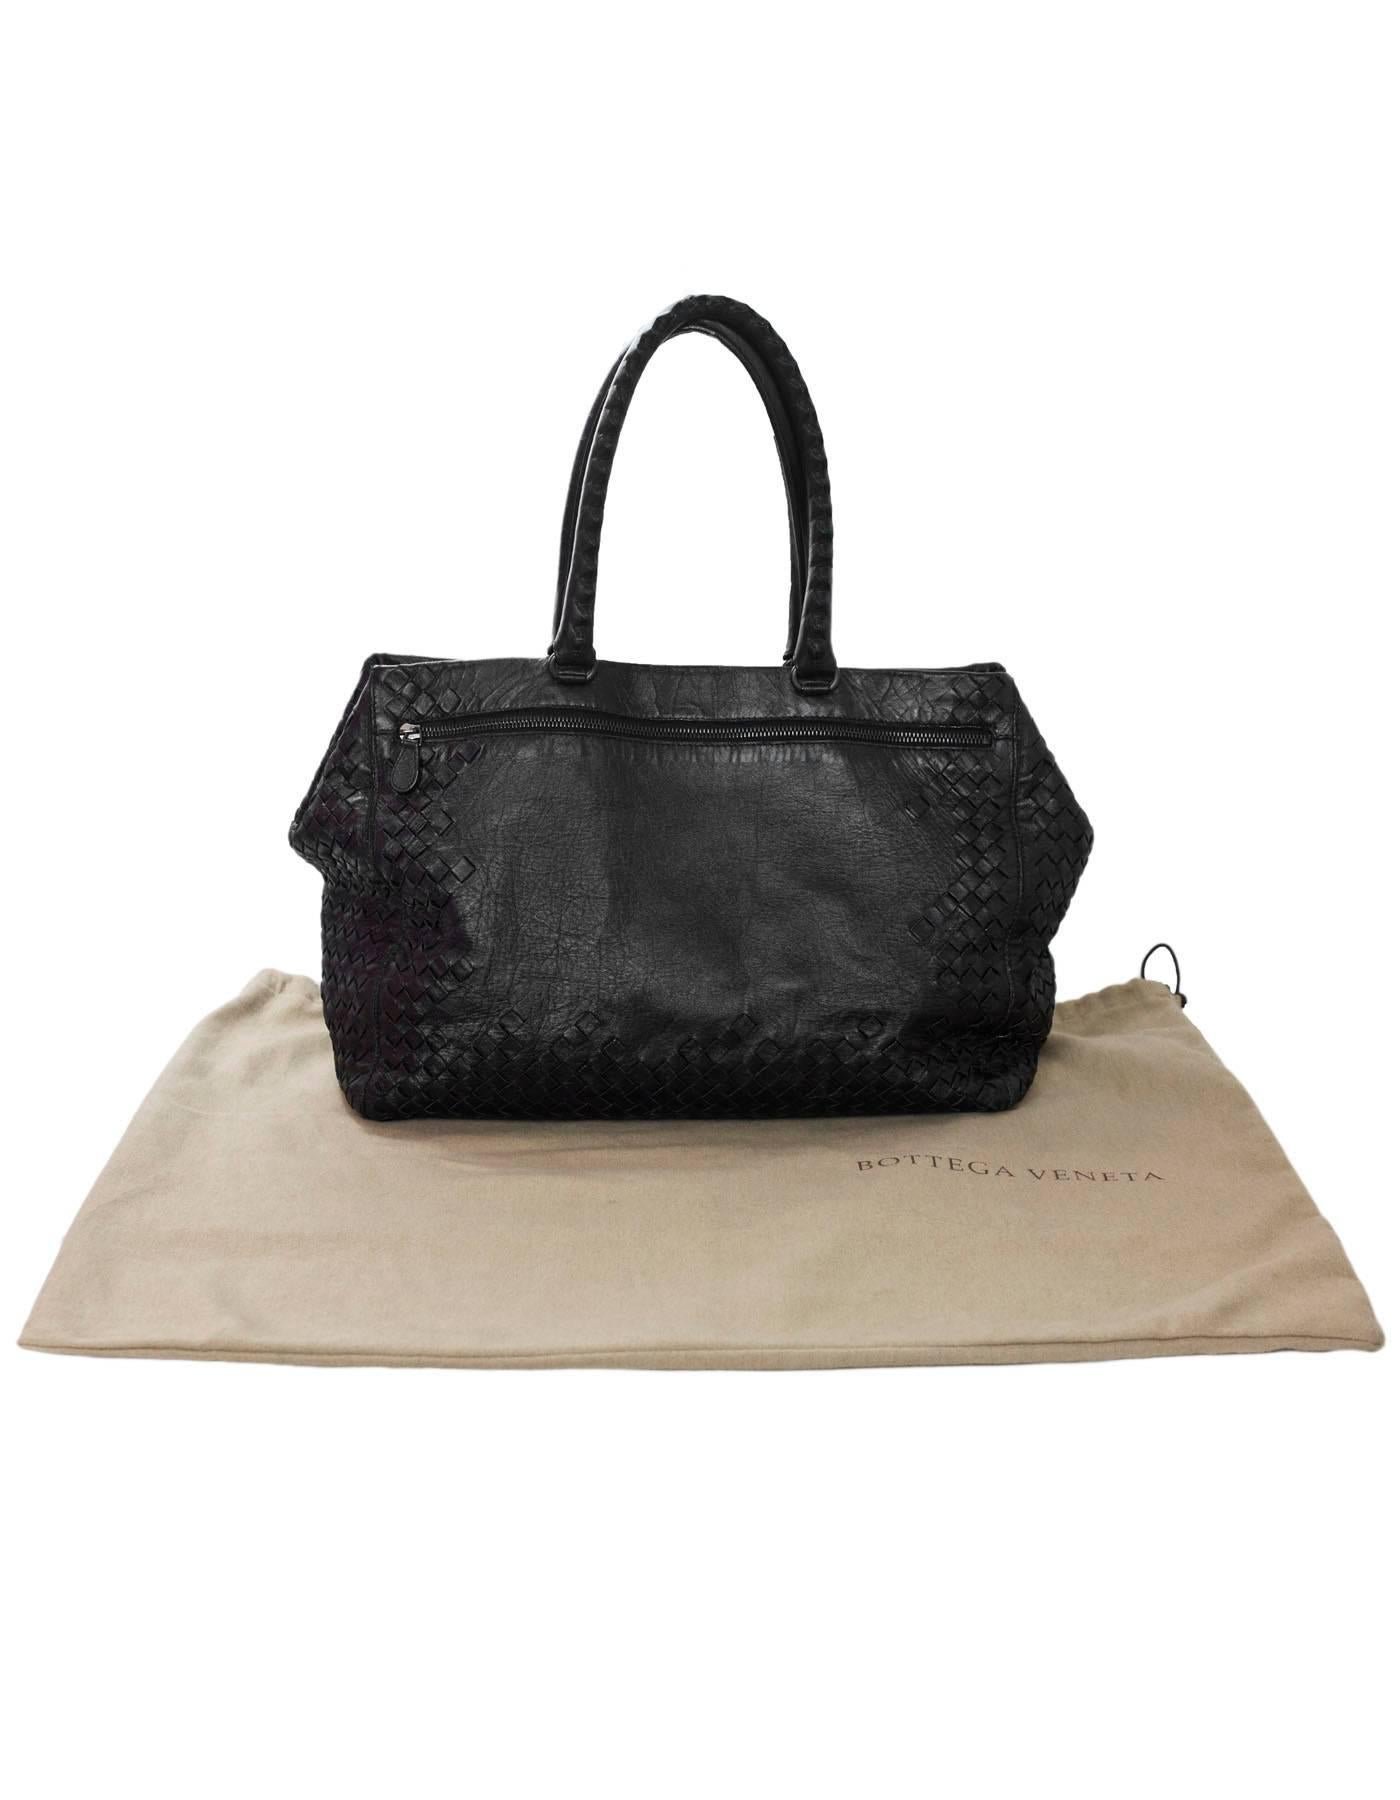 Bottega Veneta Black Woven Intrecciato and Smooth Leather Tote Bag 5